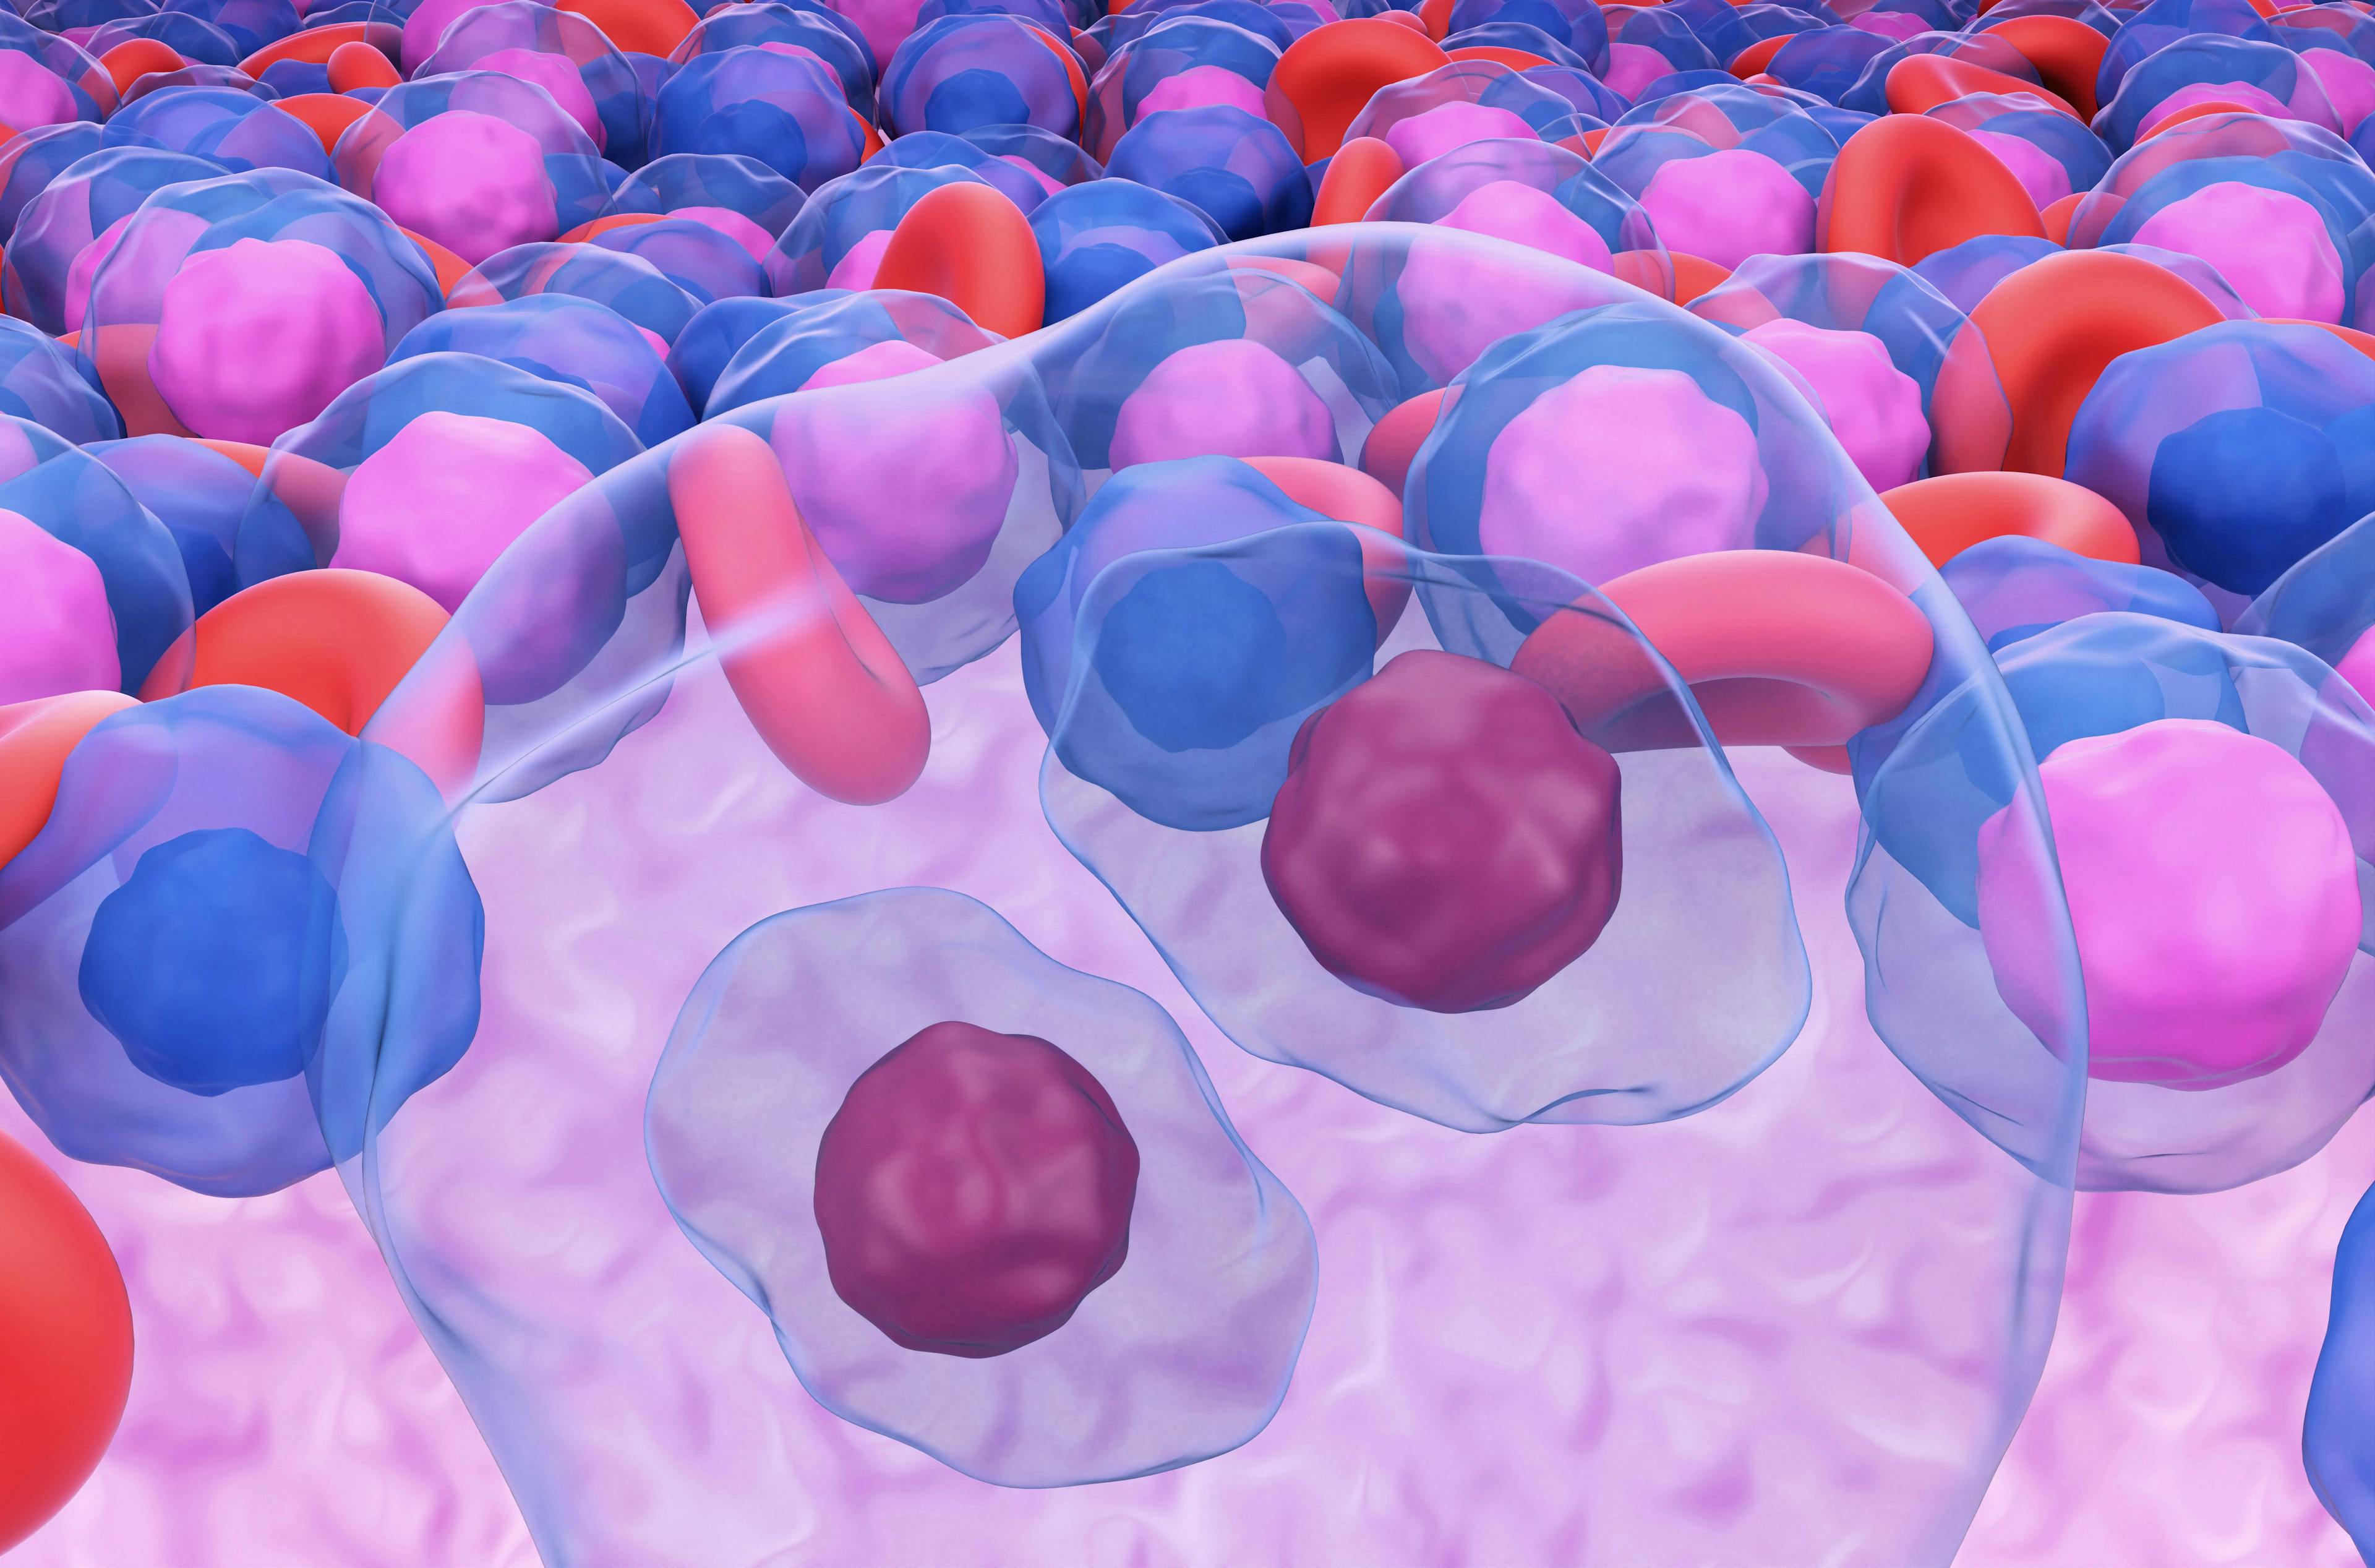 Reed-Sternberg cell in hodgkin lymphoma closeup view 3d render illustration | Image Credit: LASZLO - stock.adobe.com